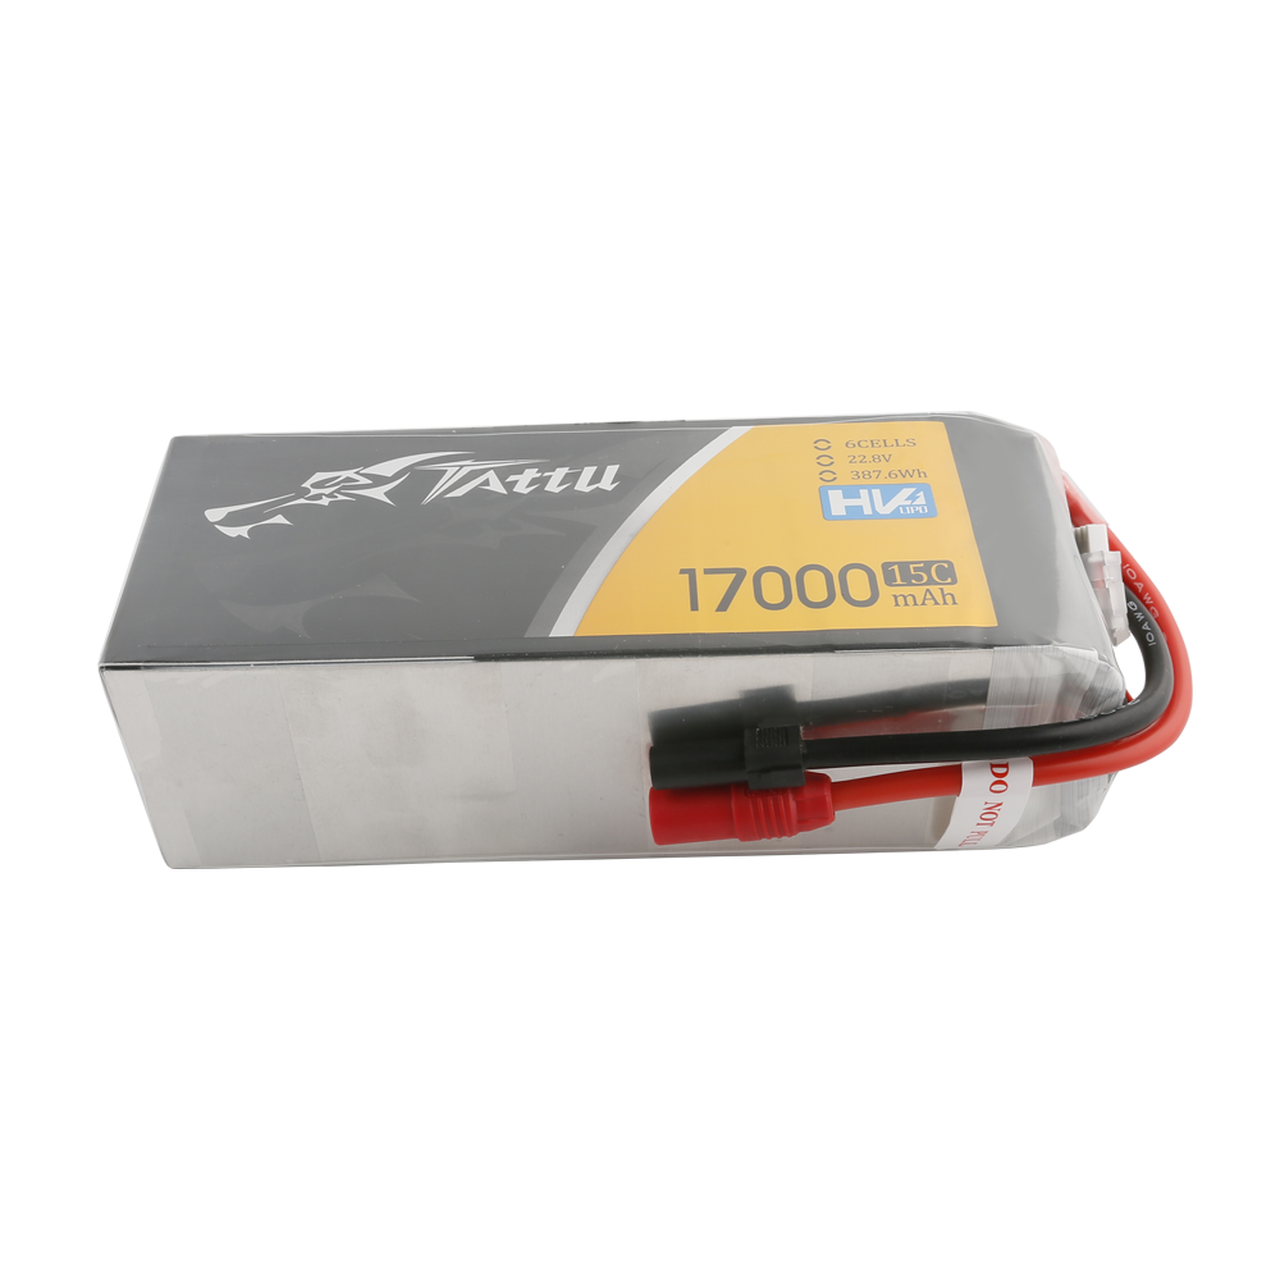 Tattu 22.8V 15C 6S 17000mAh LiPo Battery with AS150+XT150 Plug for UAV